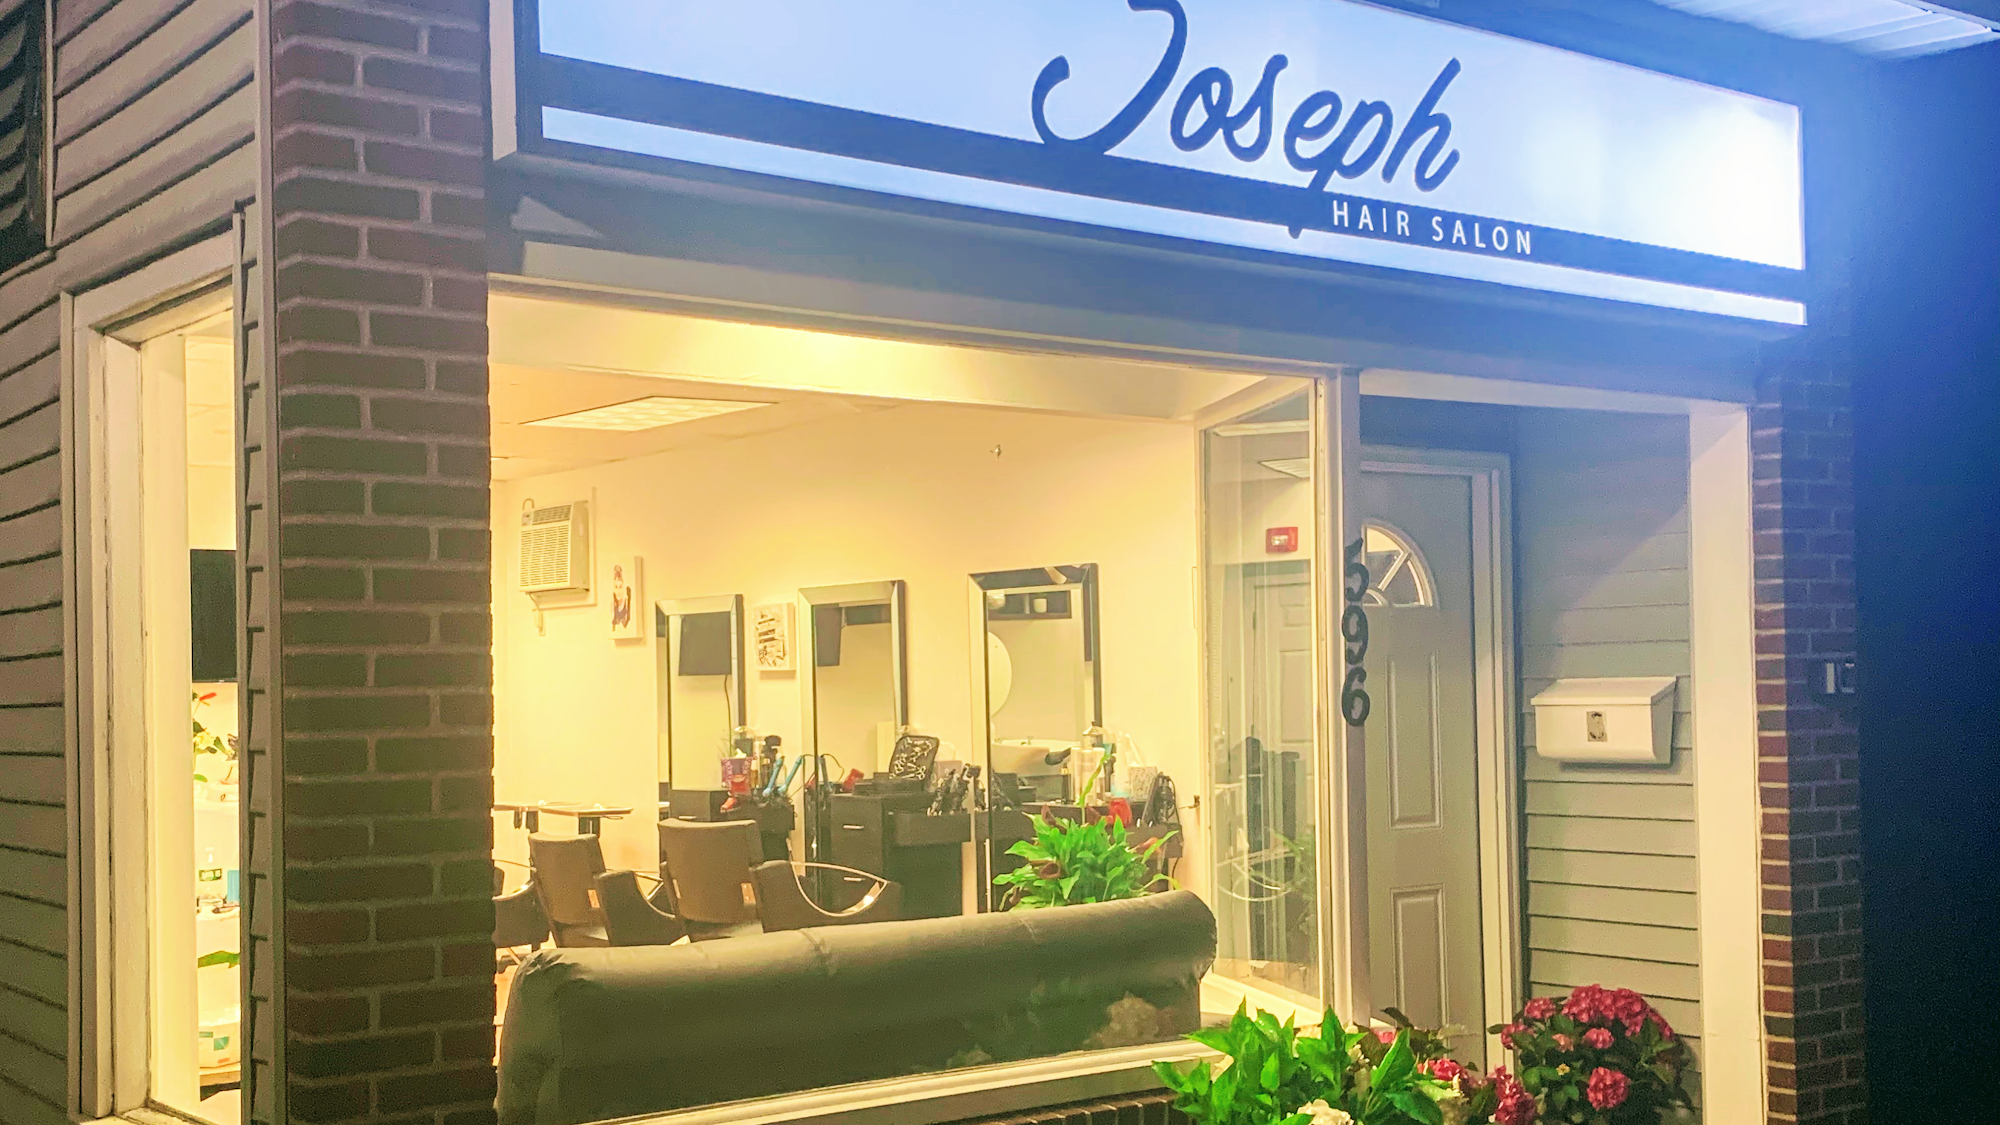 Joseph hair salon